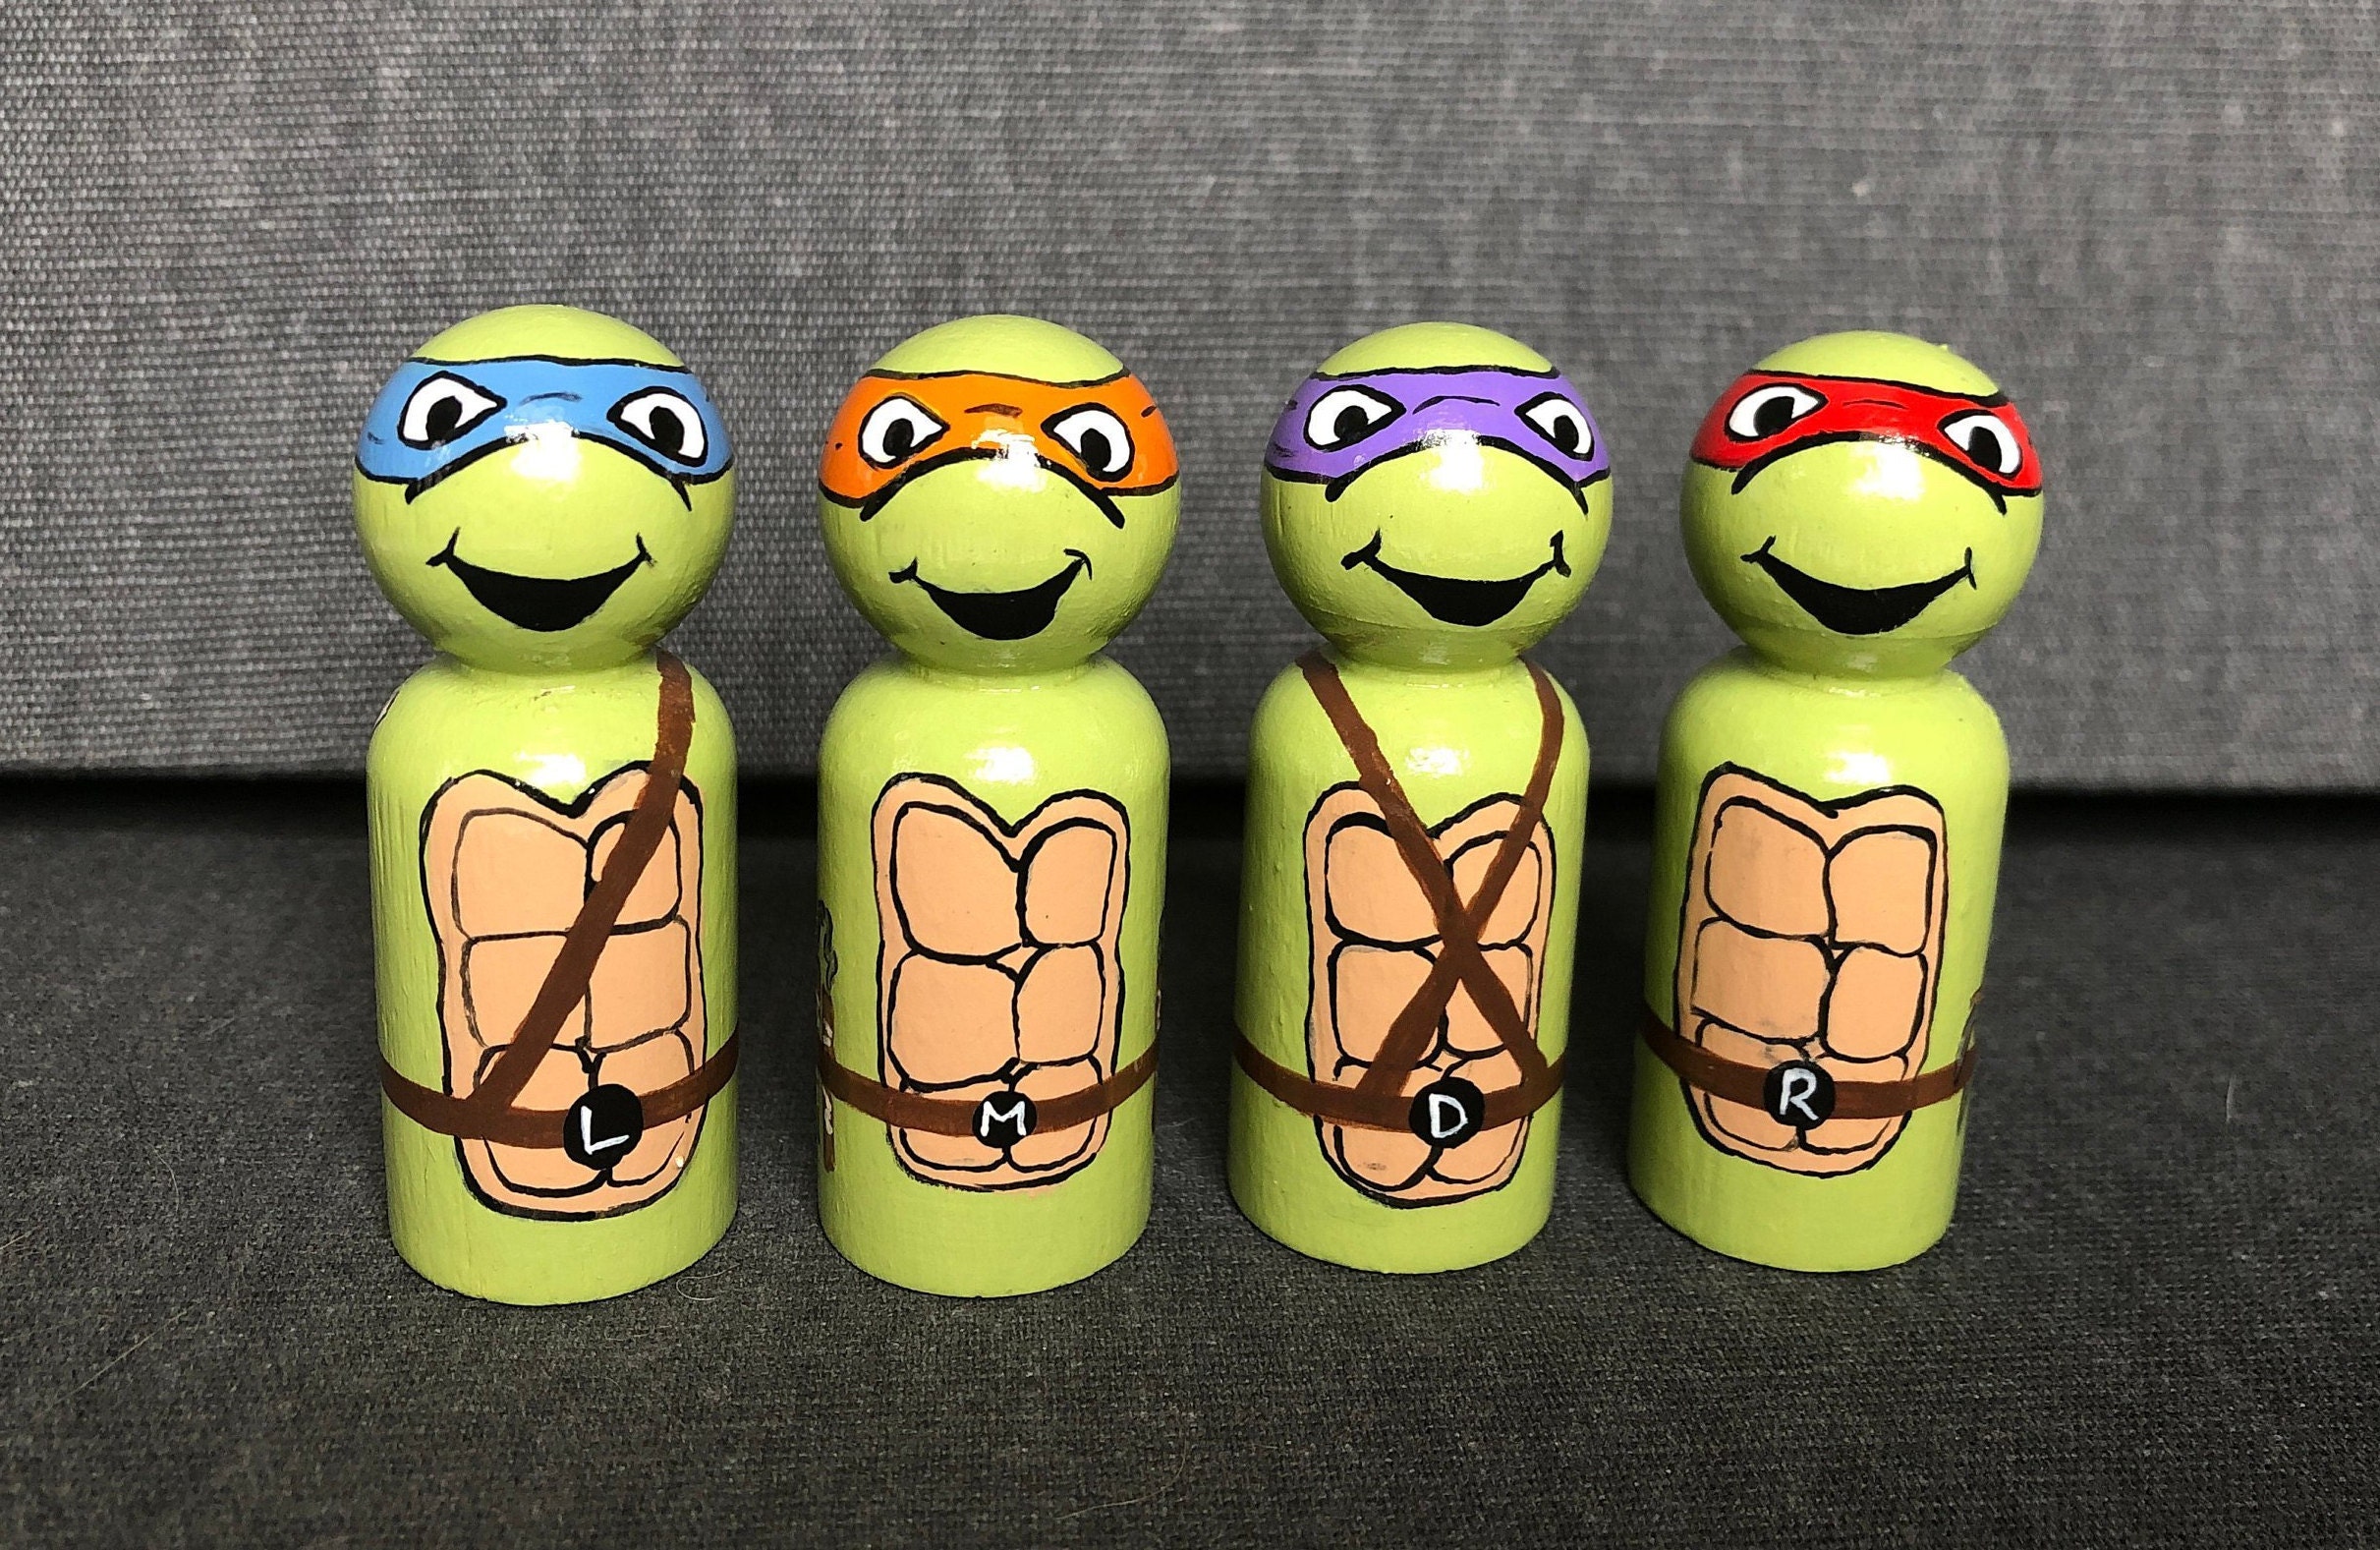 Ninja Turtles Birthday Shirt Printable Transfer - oscarsitosroom, great  price 3.99$